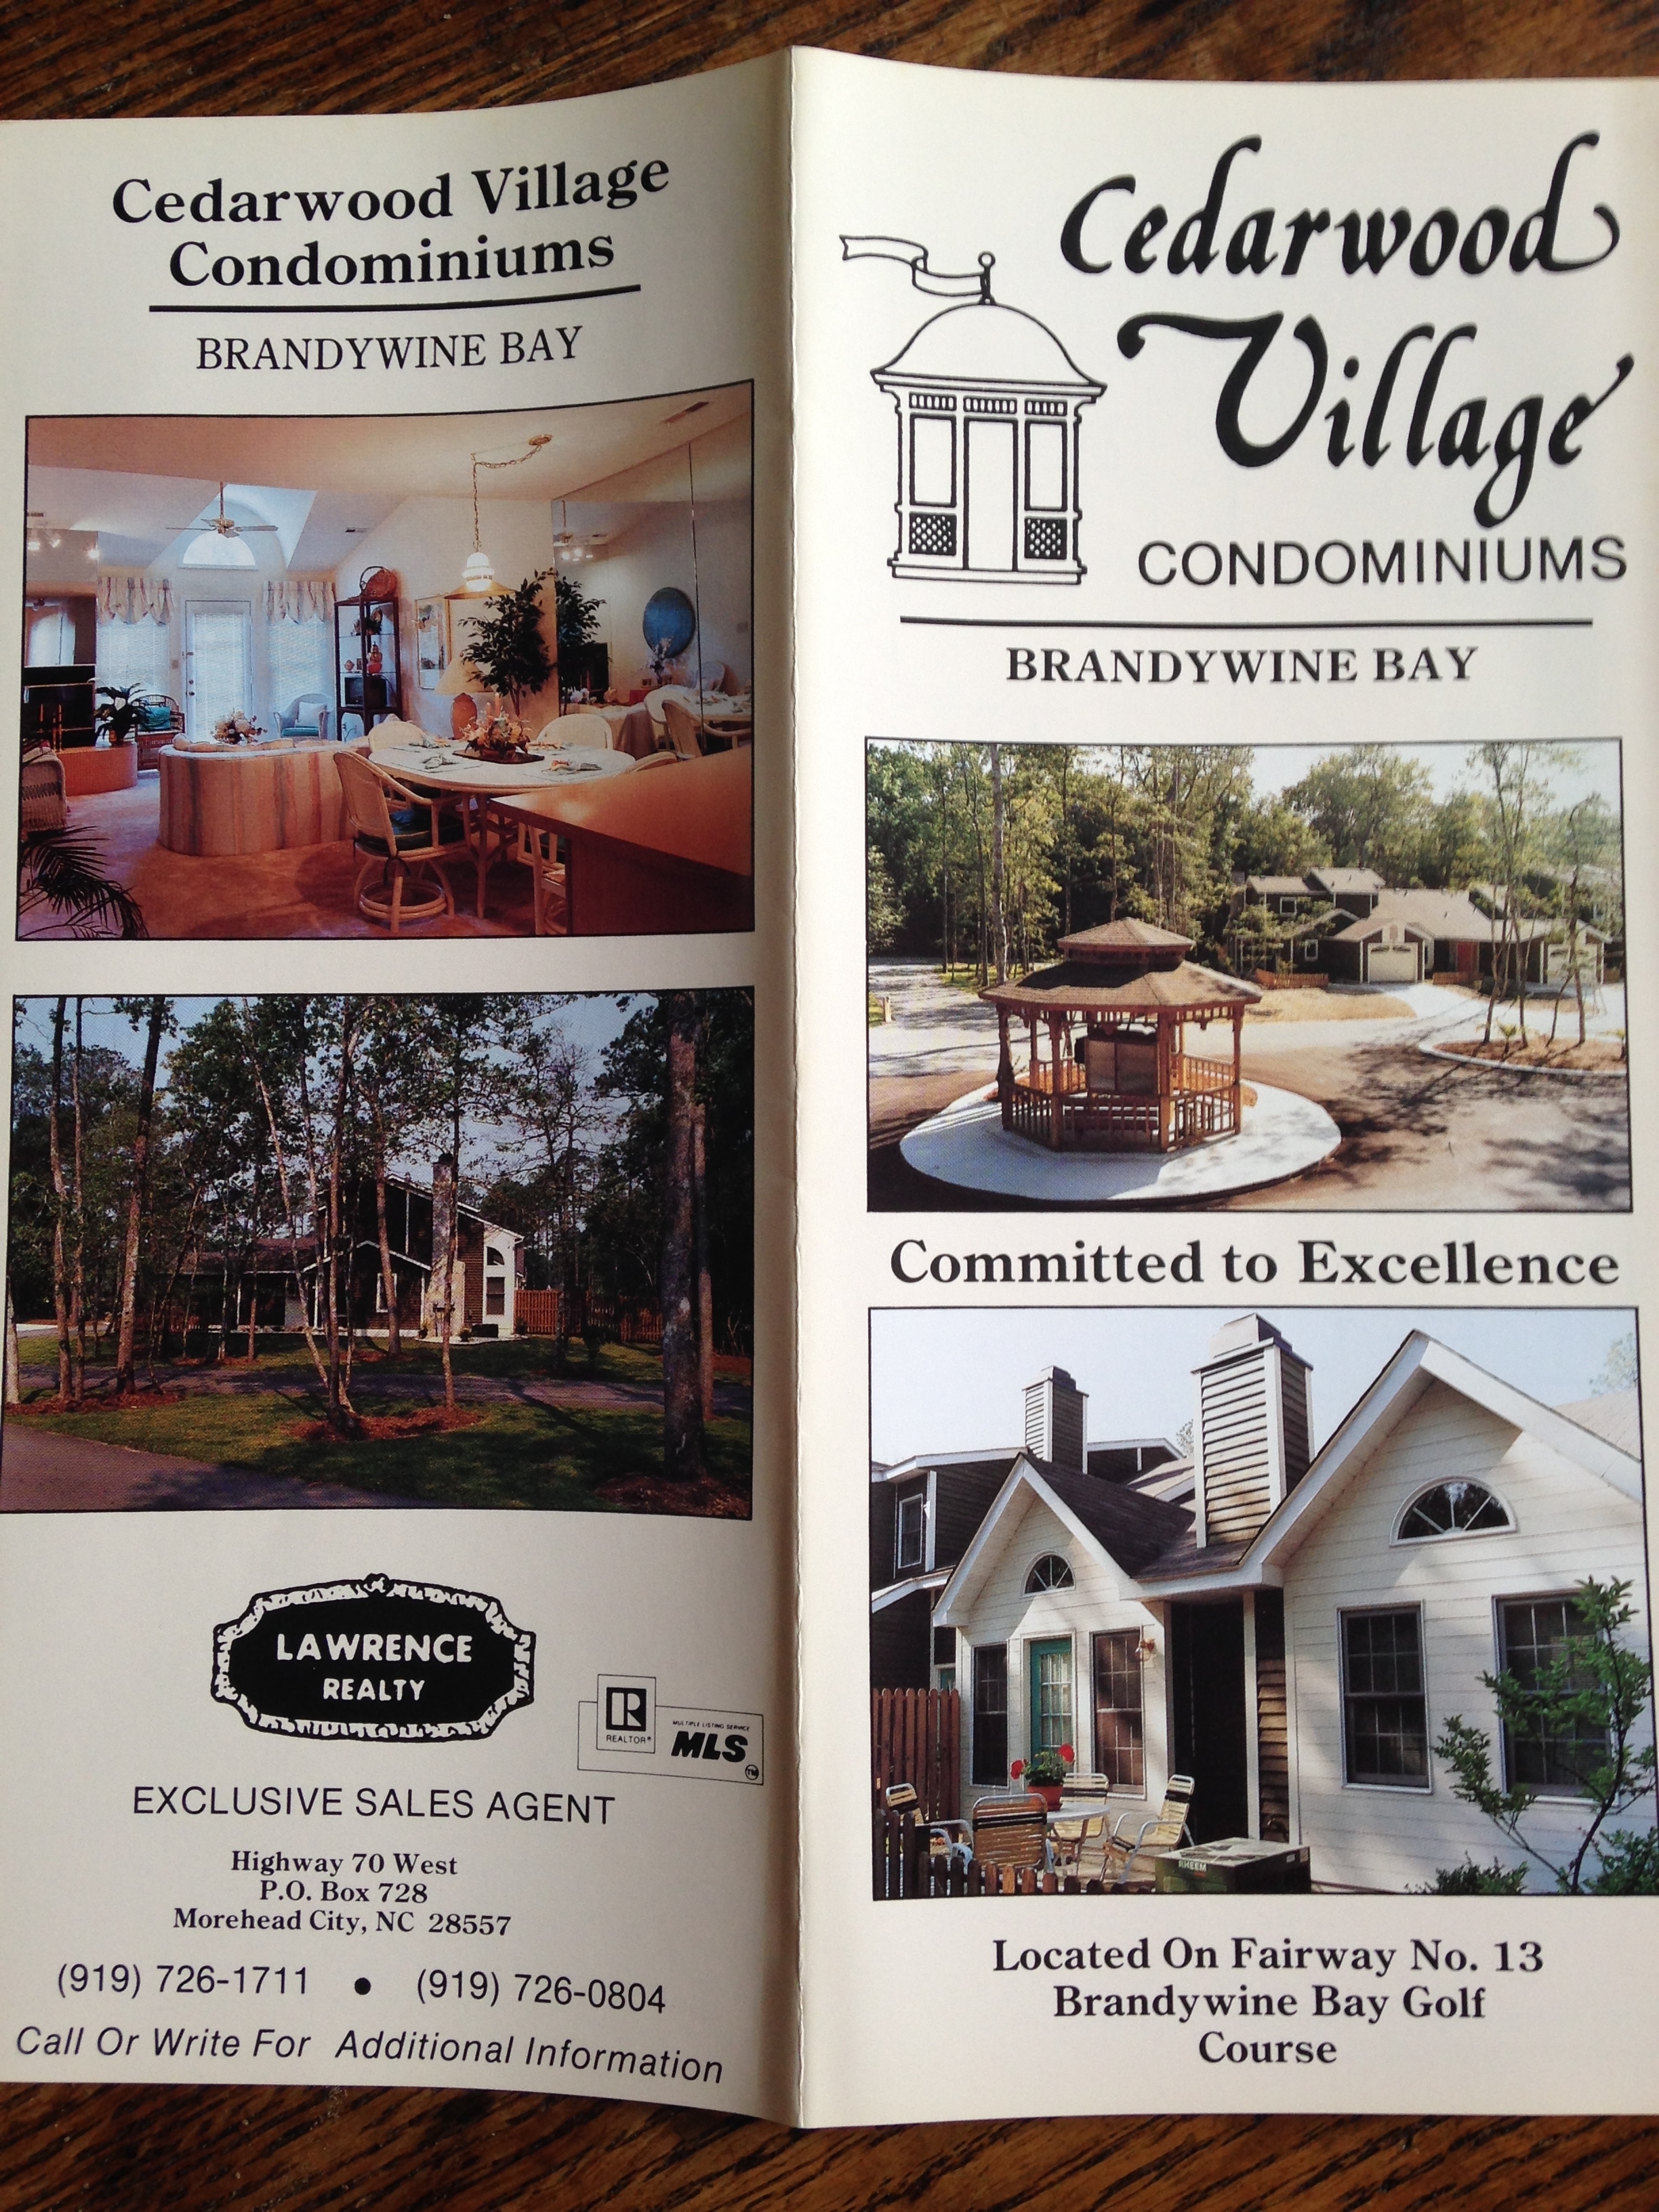 The brochure for Cedarwood Village